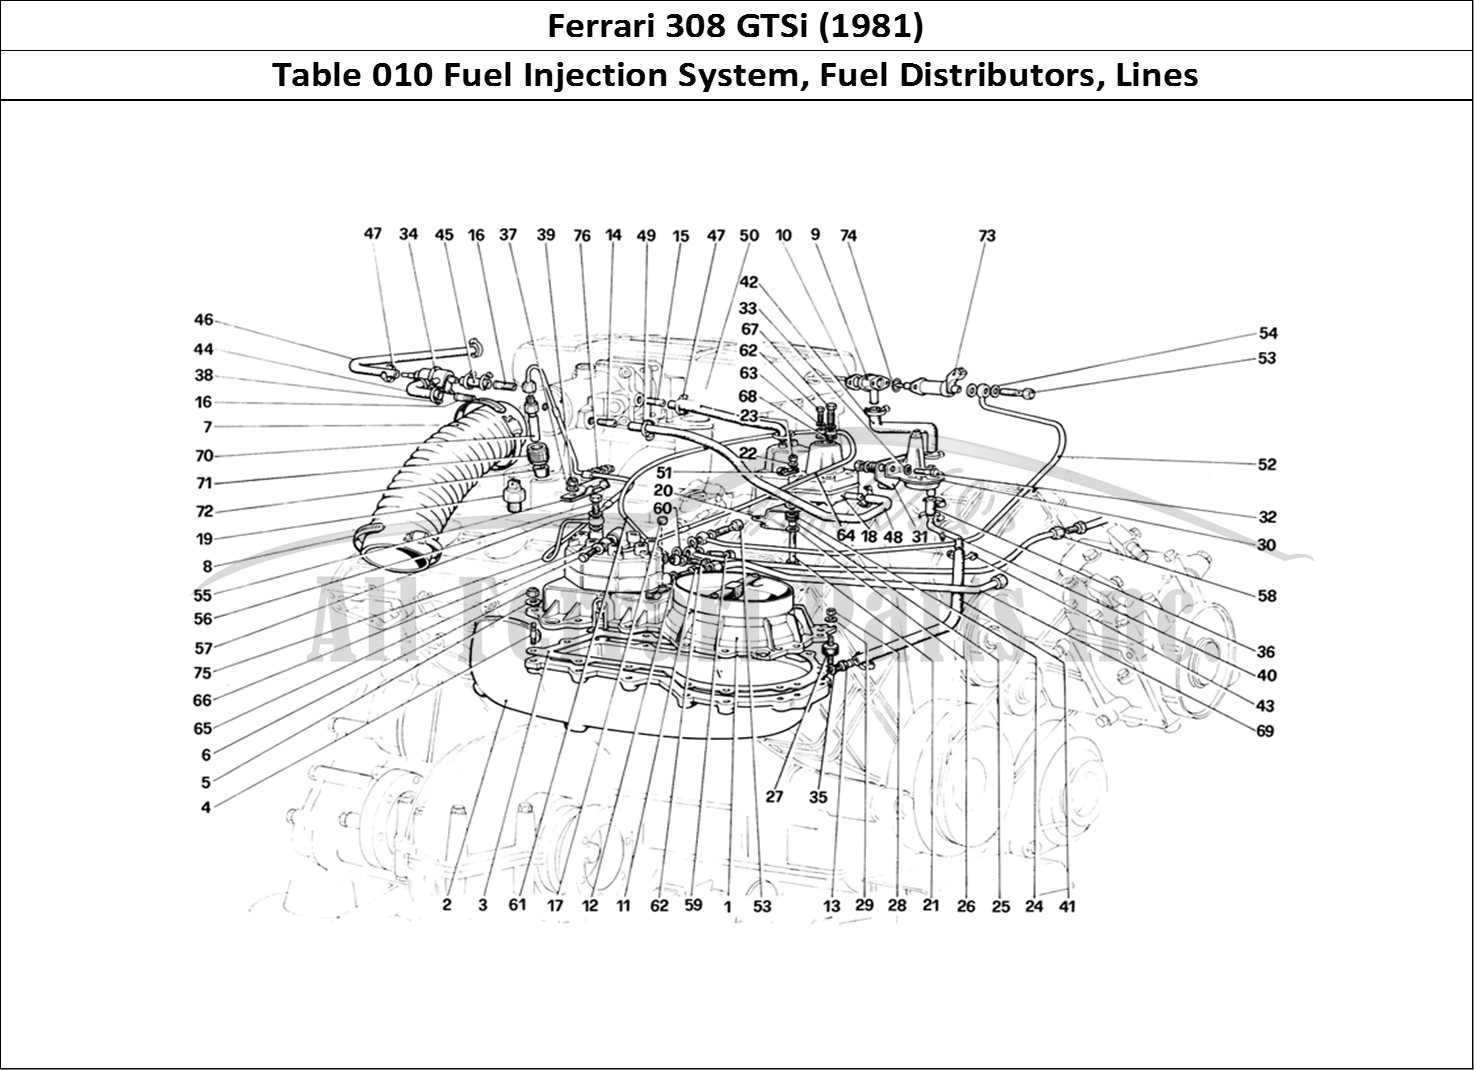 Ferrari Parts Ferrari 308 GTBi (1981) Page 010 Fuel Injection System - F